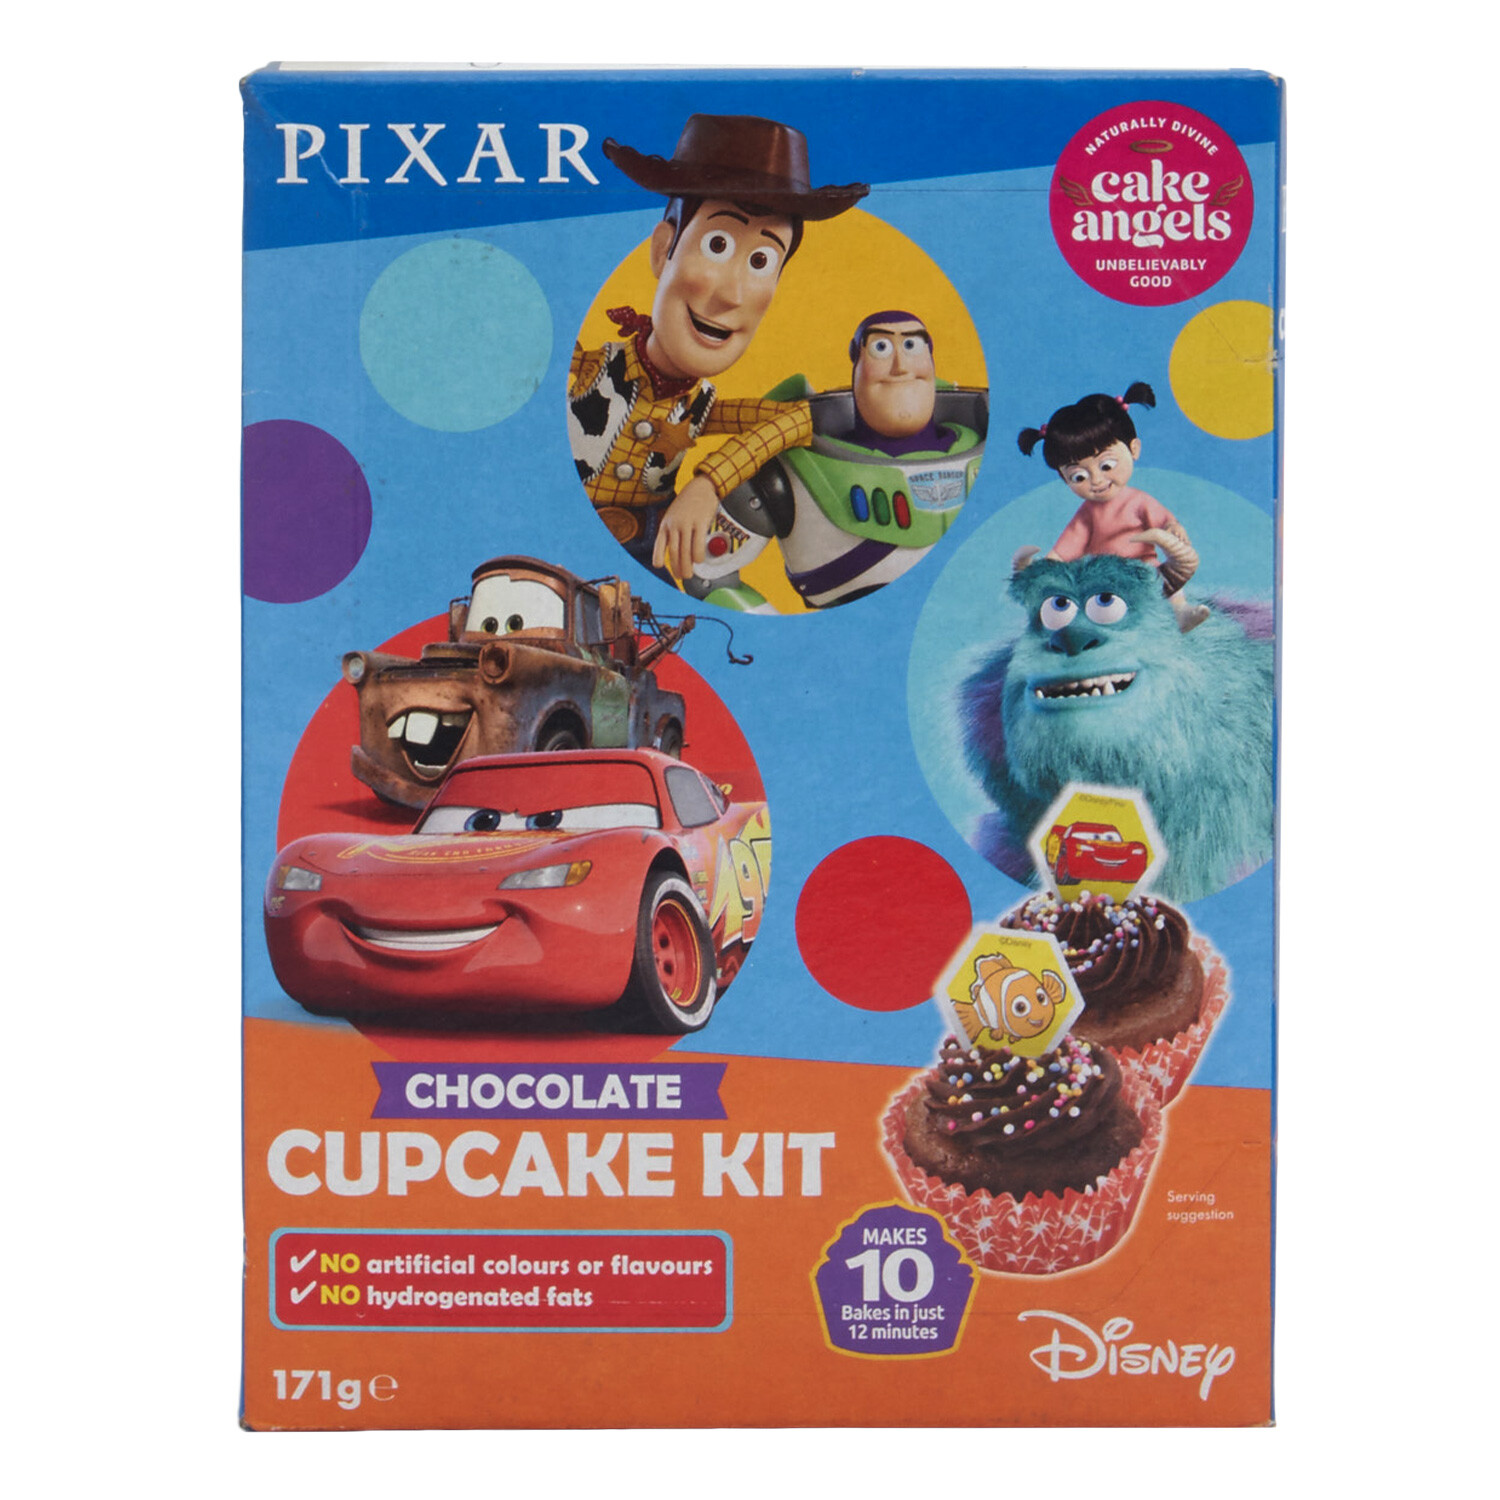 Disney Pixar Chocolate Cupcake Kit - Blue Image 1